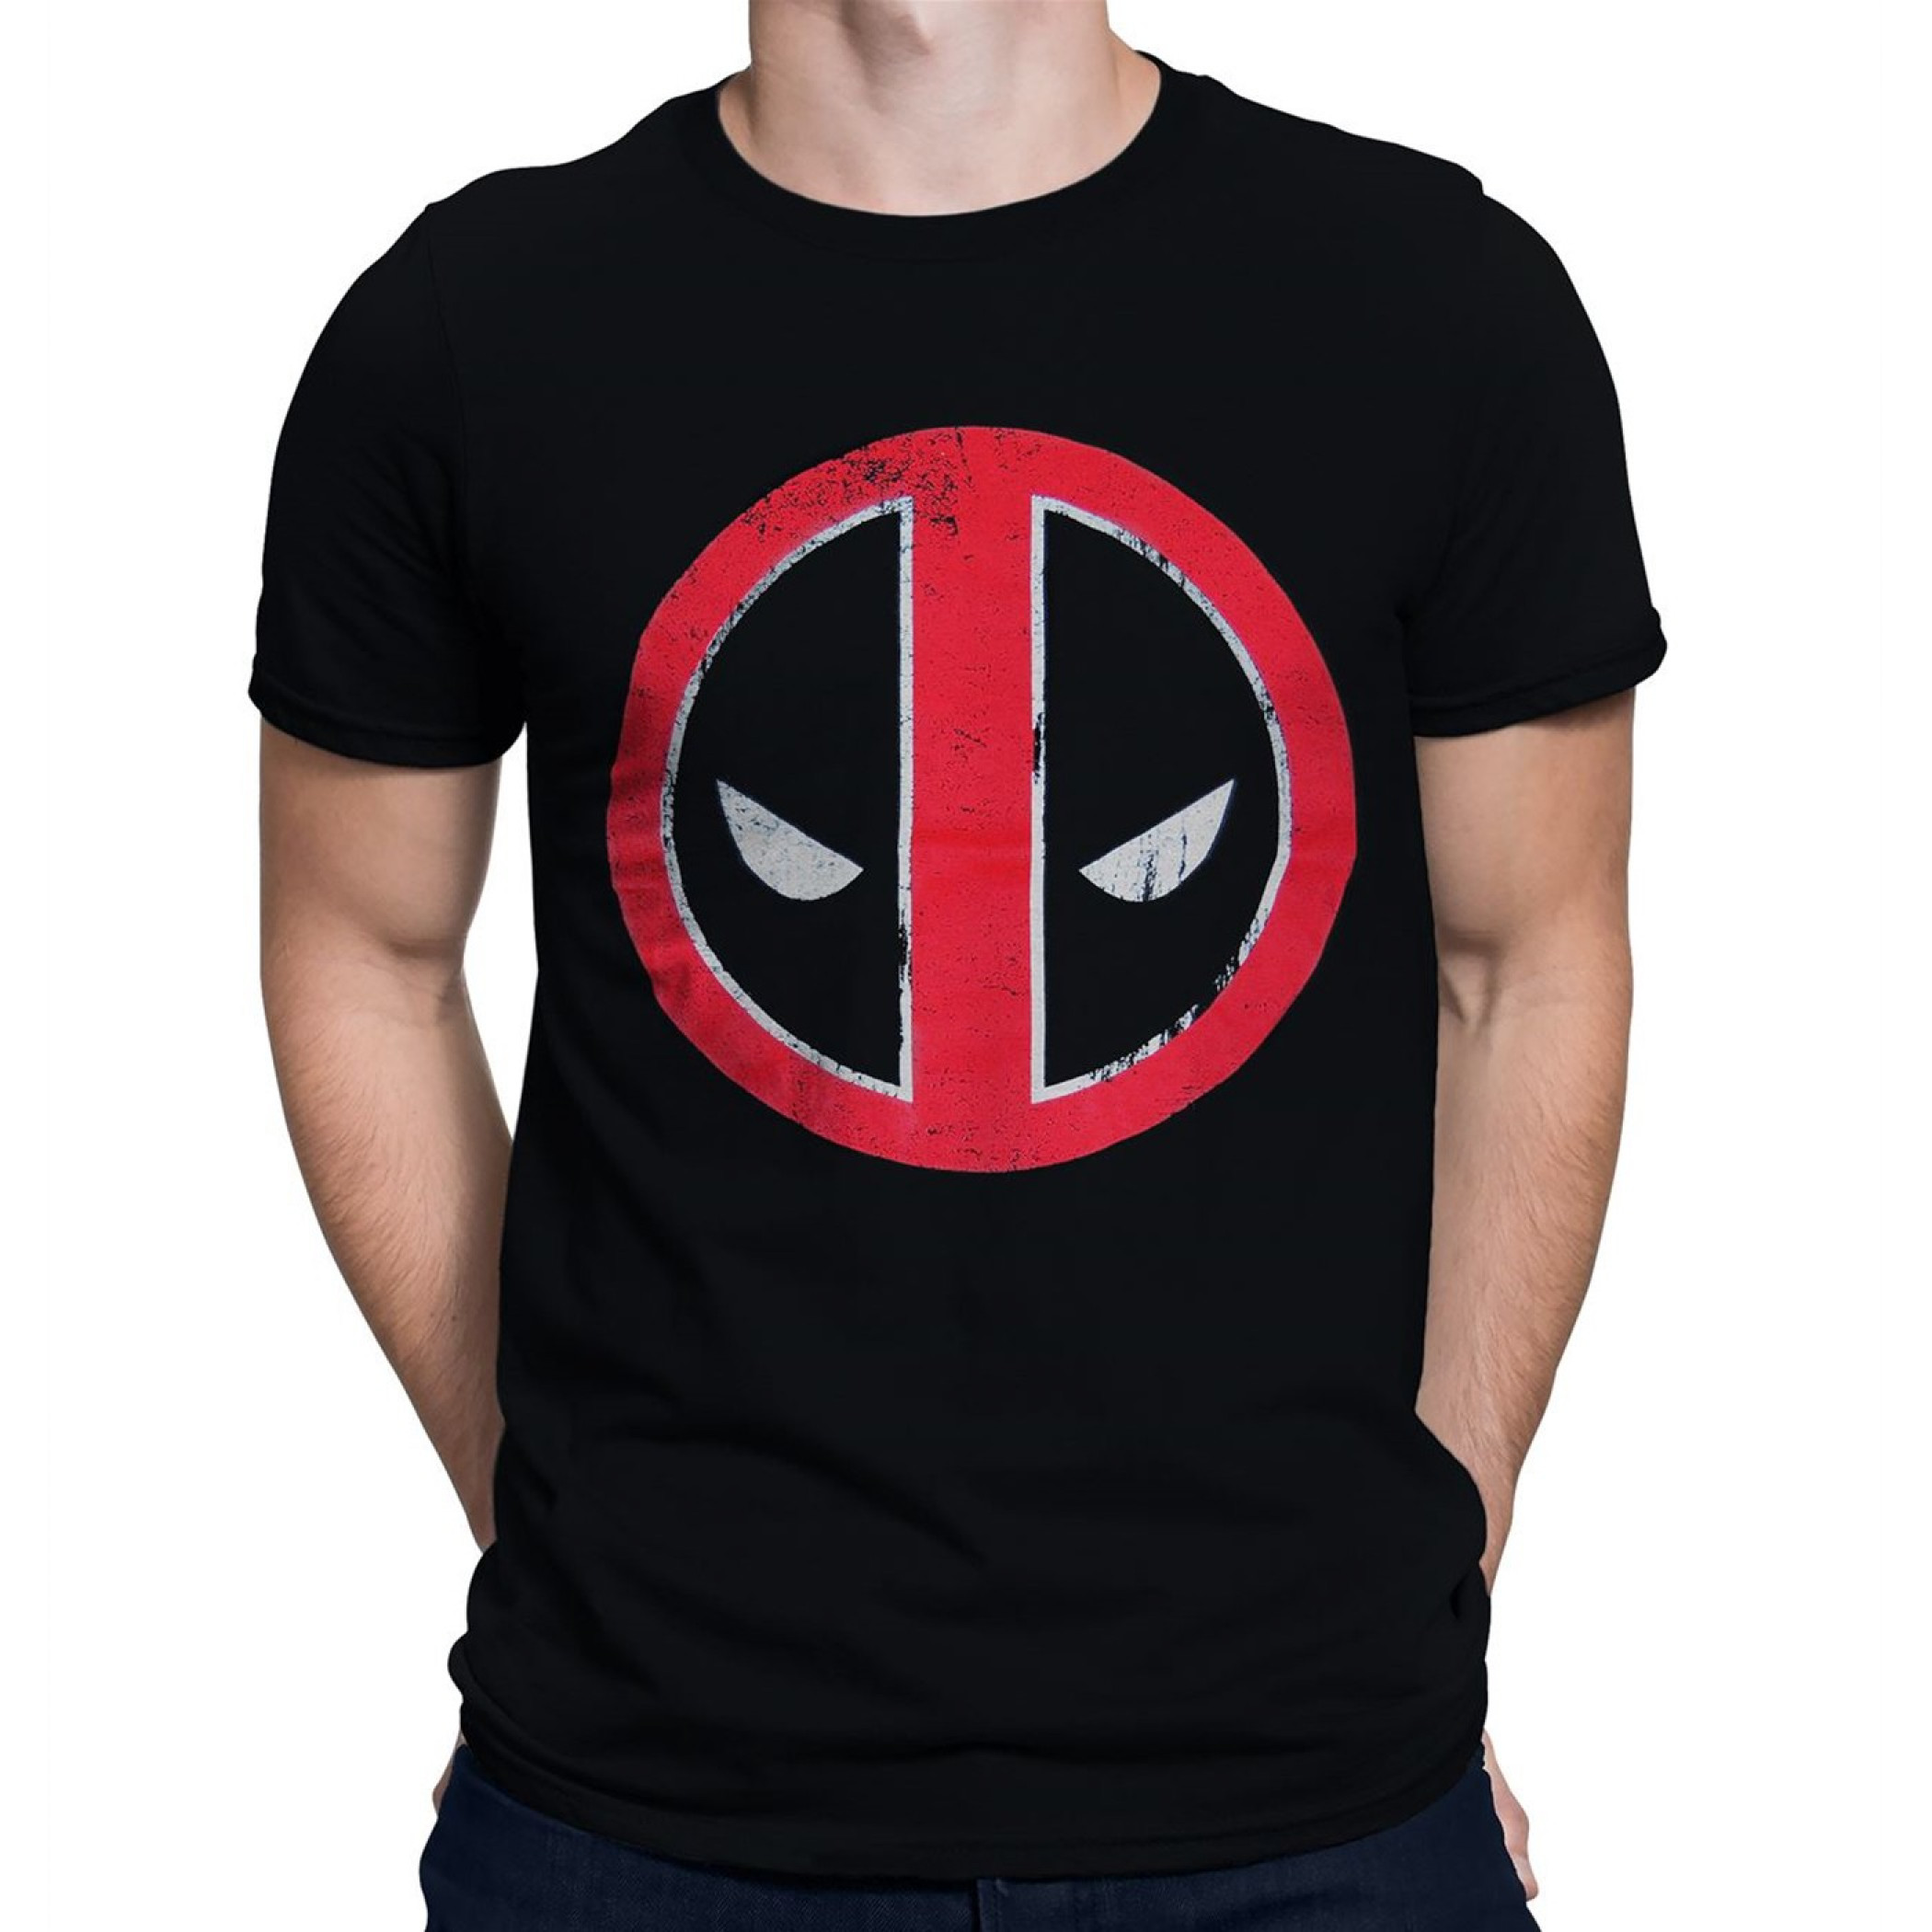 Deadpool Logo New Era Hat and T-Shirt Bundle